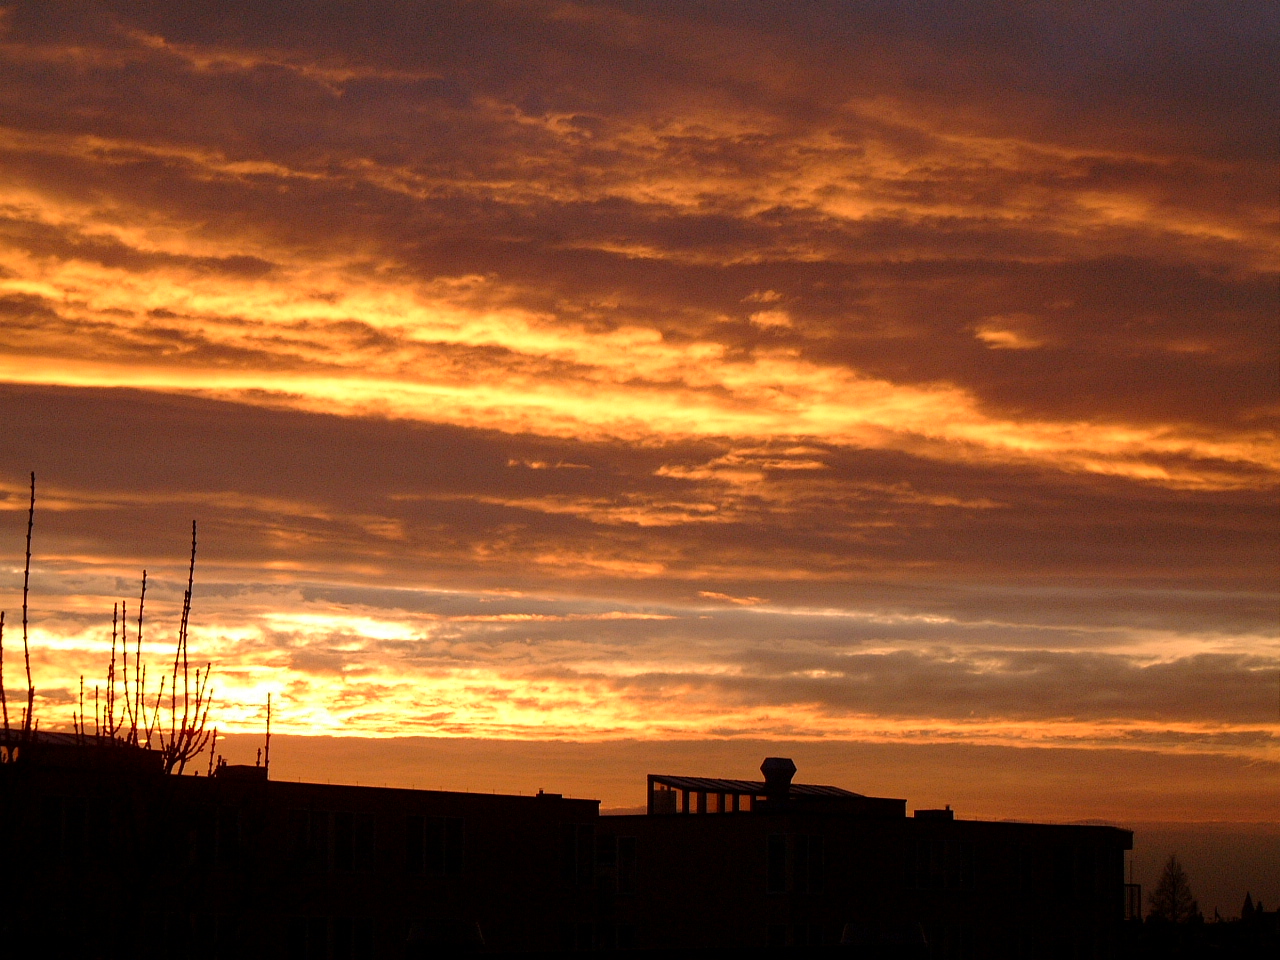 maartent sundown sunset sunup sunrise red sky dusk dawn roofs